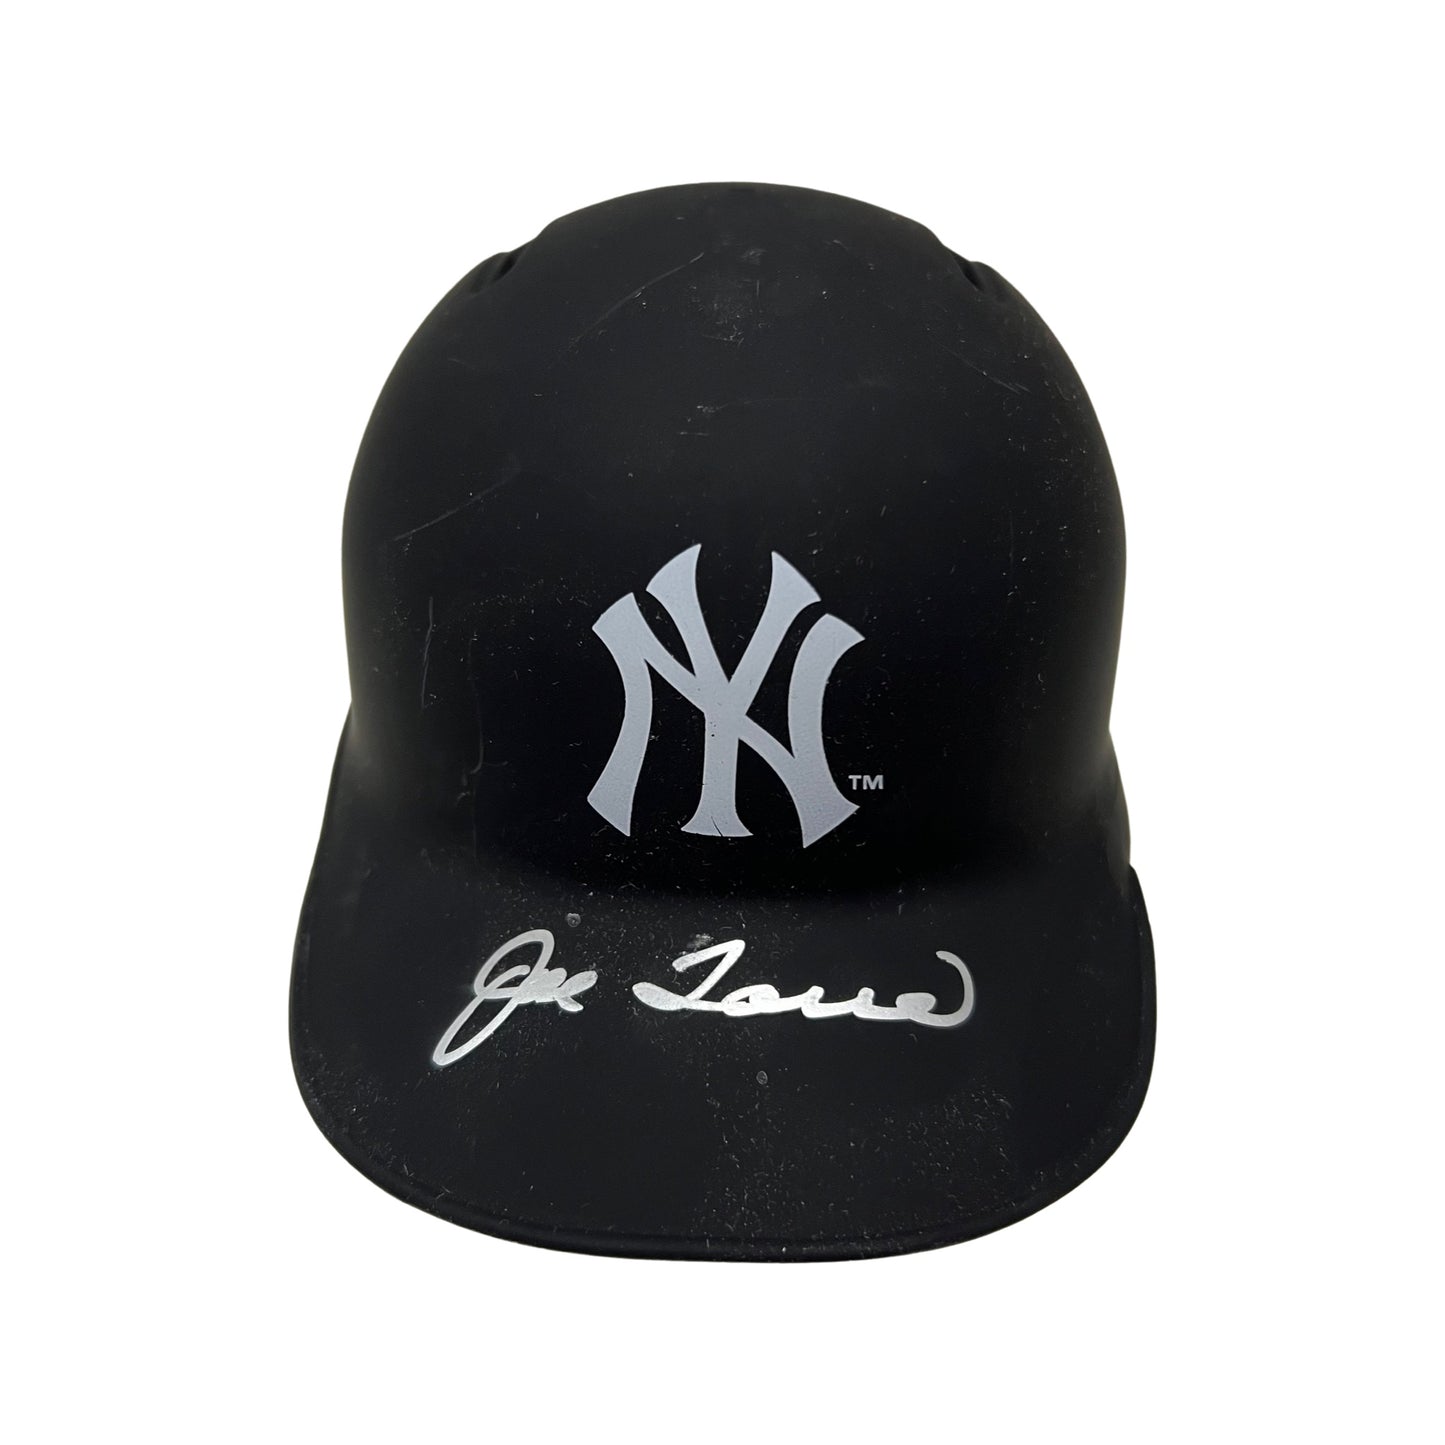 Joe Torre Autographed New York Yankees Flat Black Mini Helmet JSA